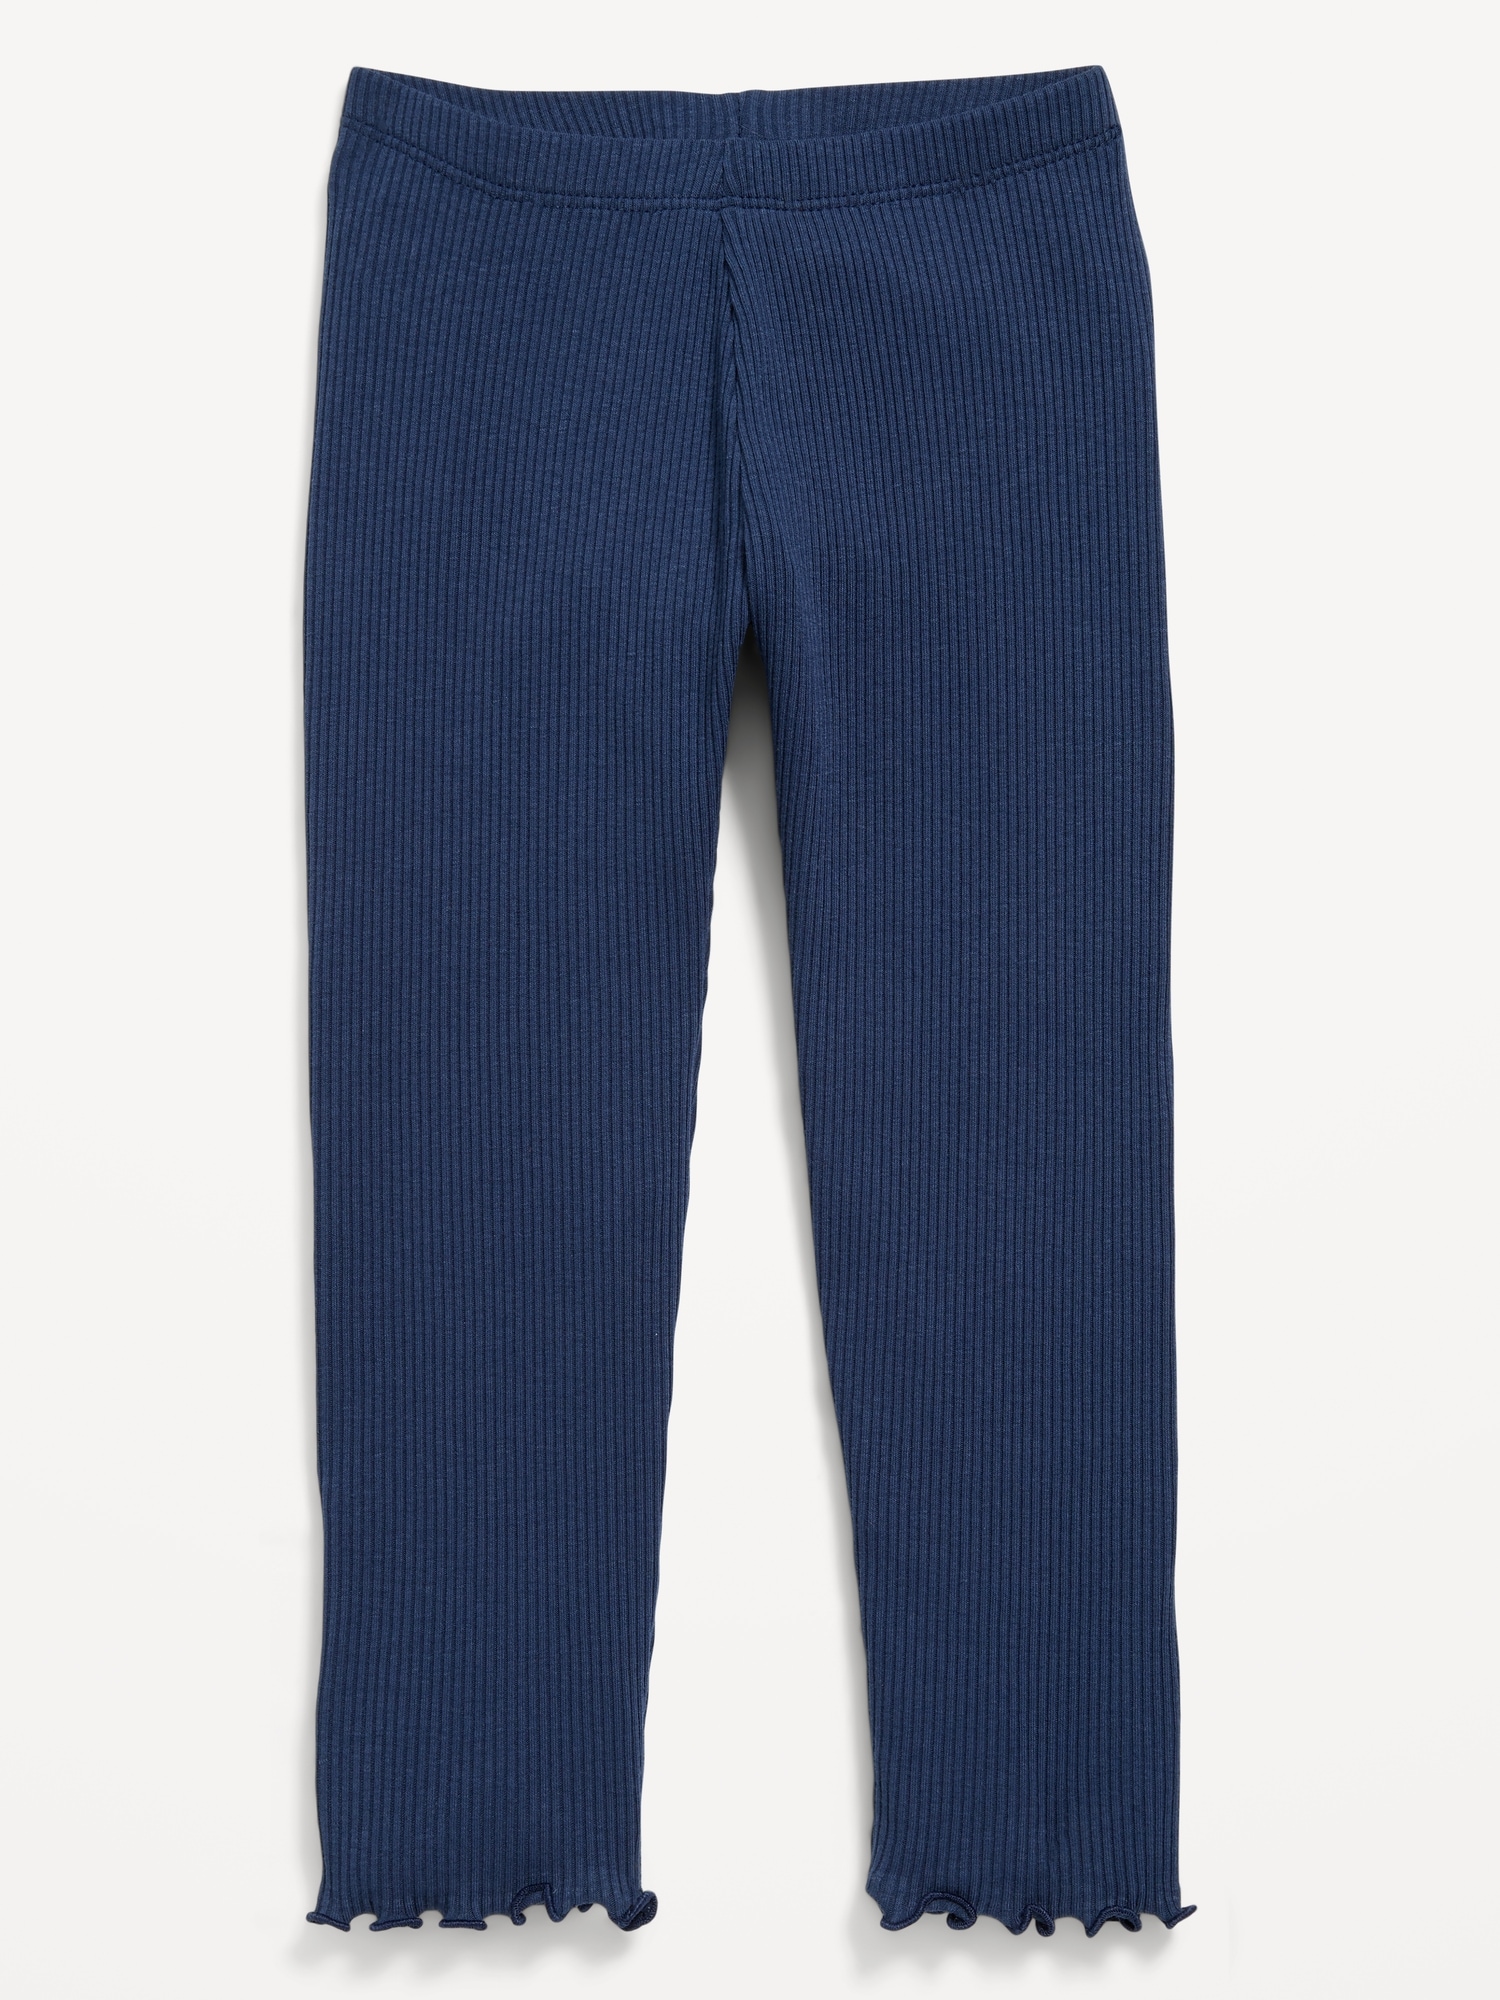 AK02G – Skinny 5-Pocket Knit Pants for Girls , Stretch, Adjustable Waist,  Khaki, Navy – Aventura Kids